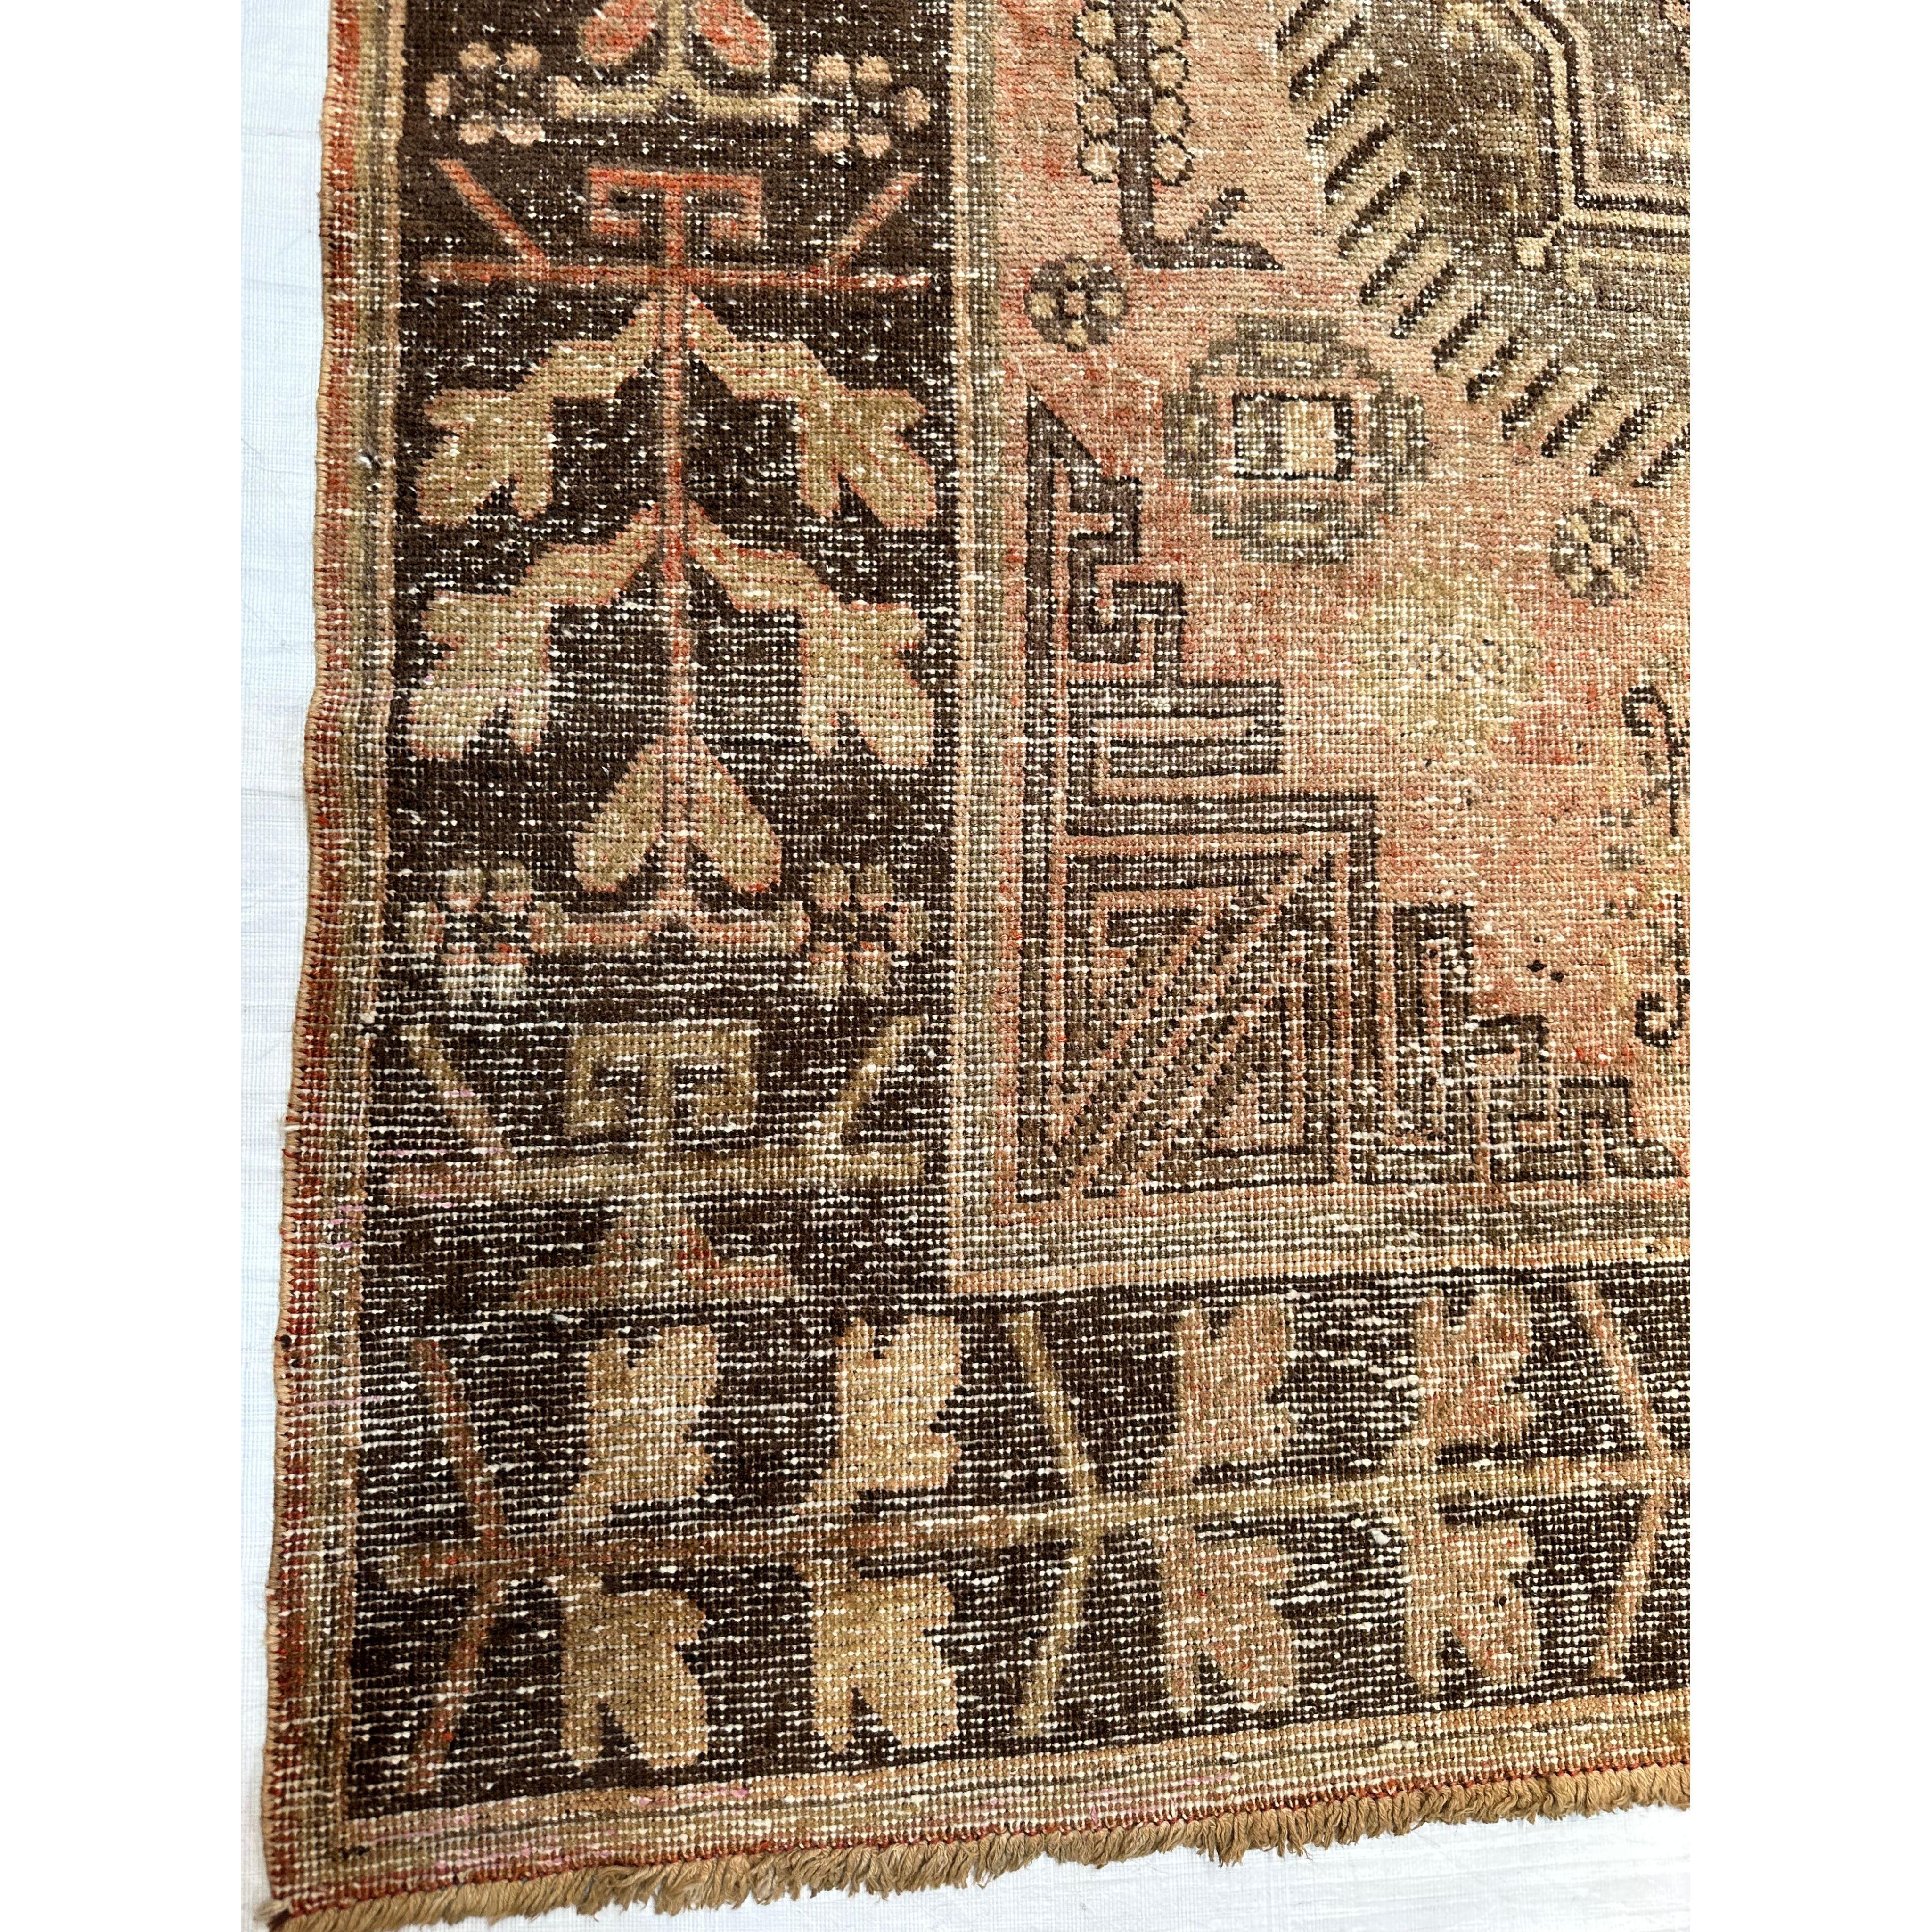 Tribal Tapis tribal Khotan Samarkand du XIXe siècle en vente